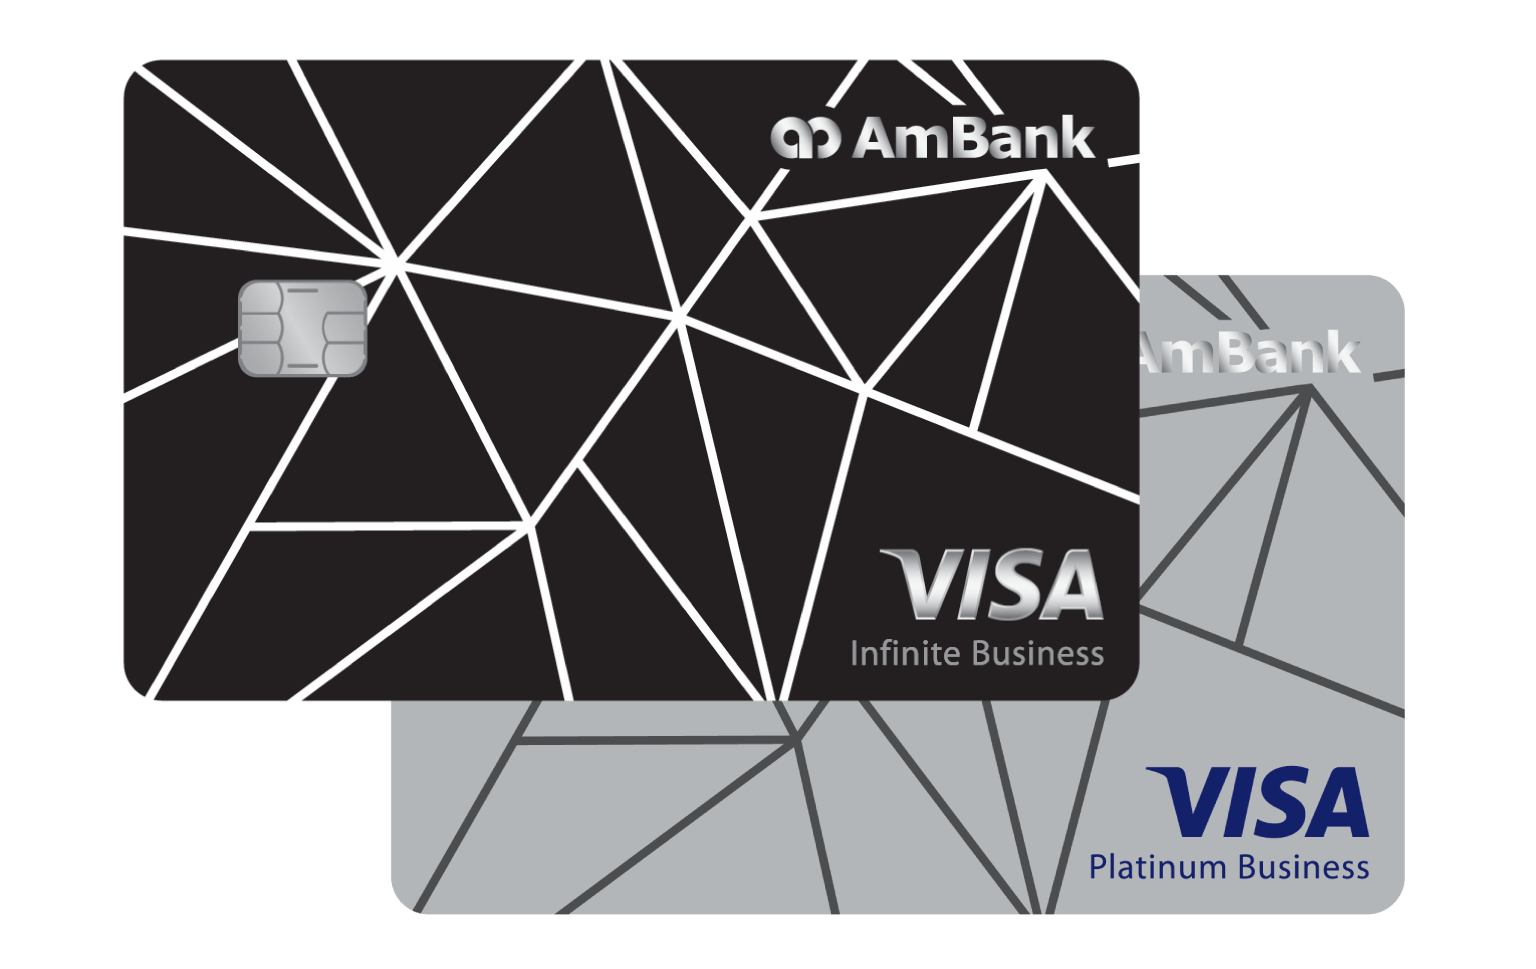 AmBank Visa Platinum and Infinite Business Cards